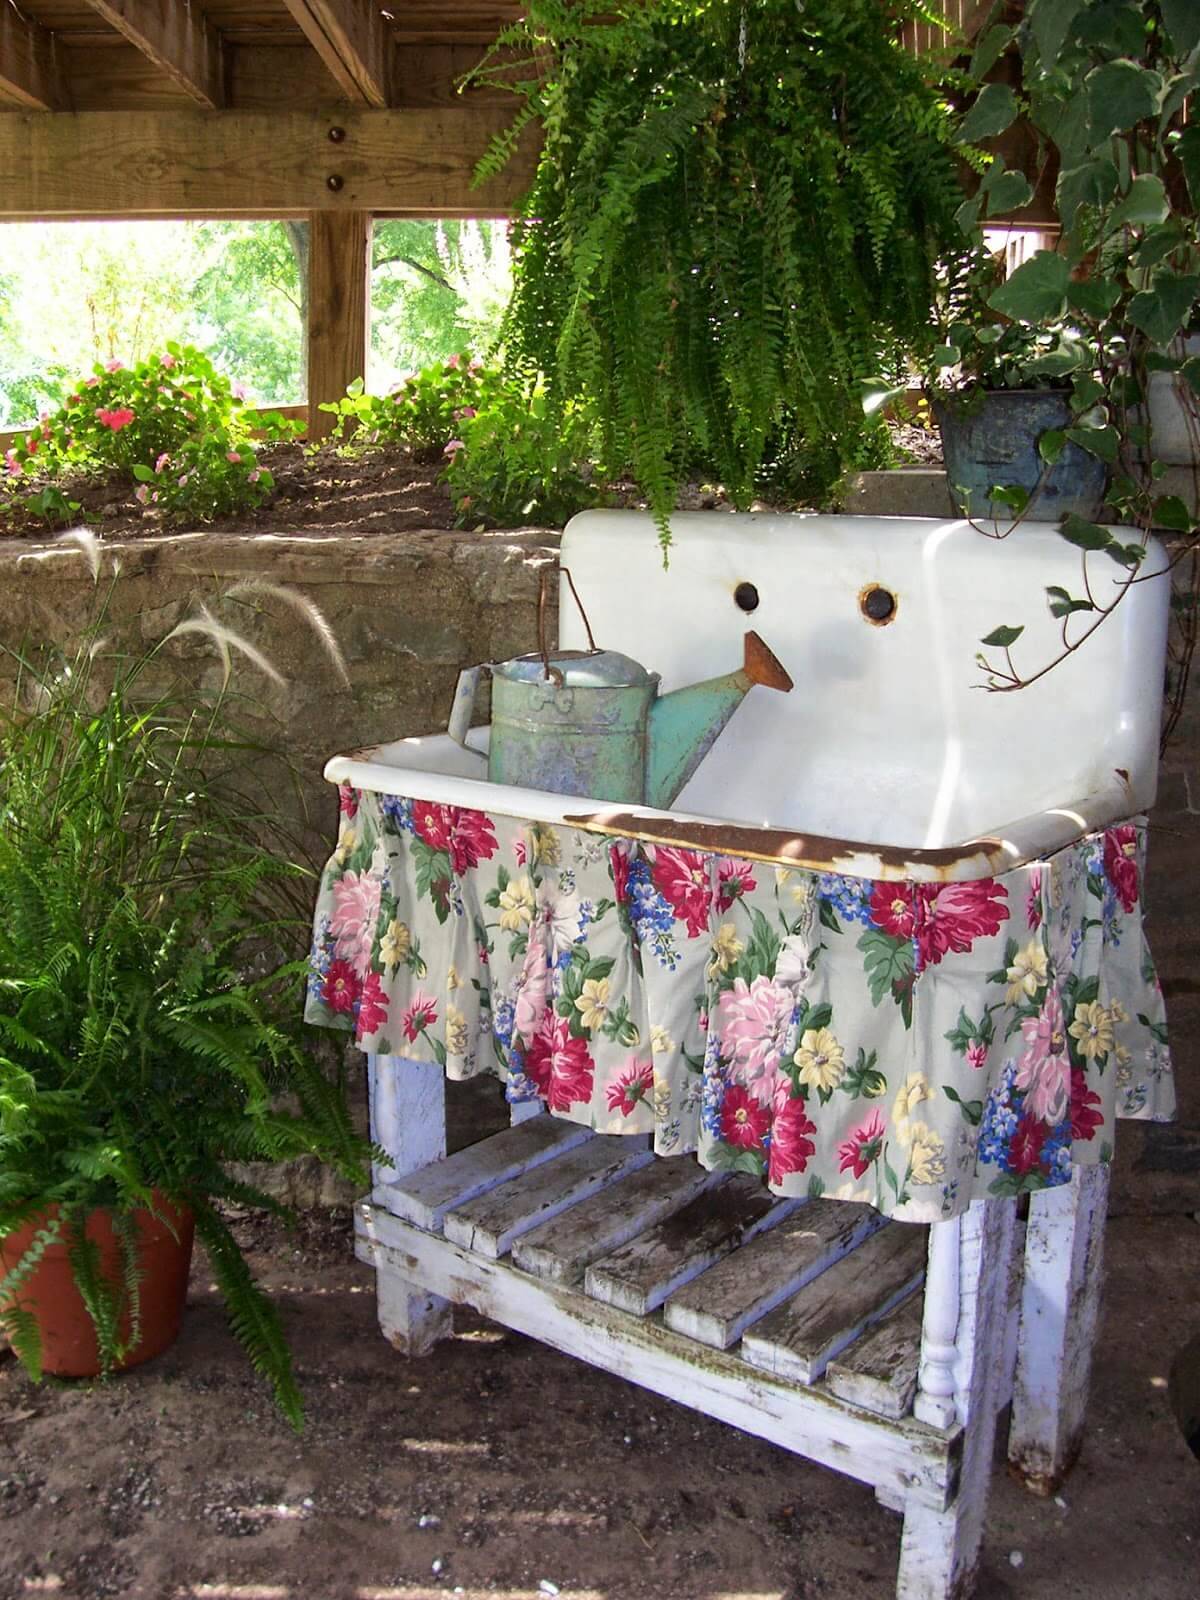 Most Amazing Vintage Garden Decorations